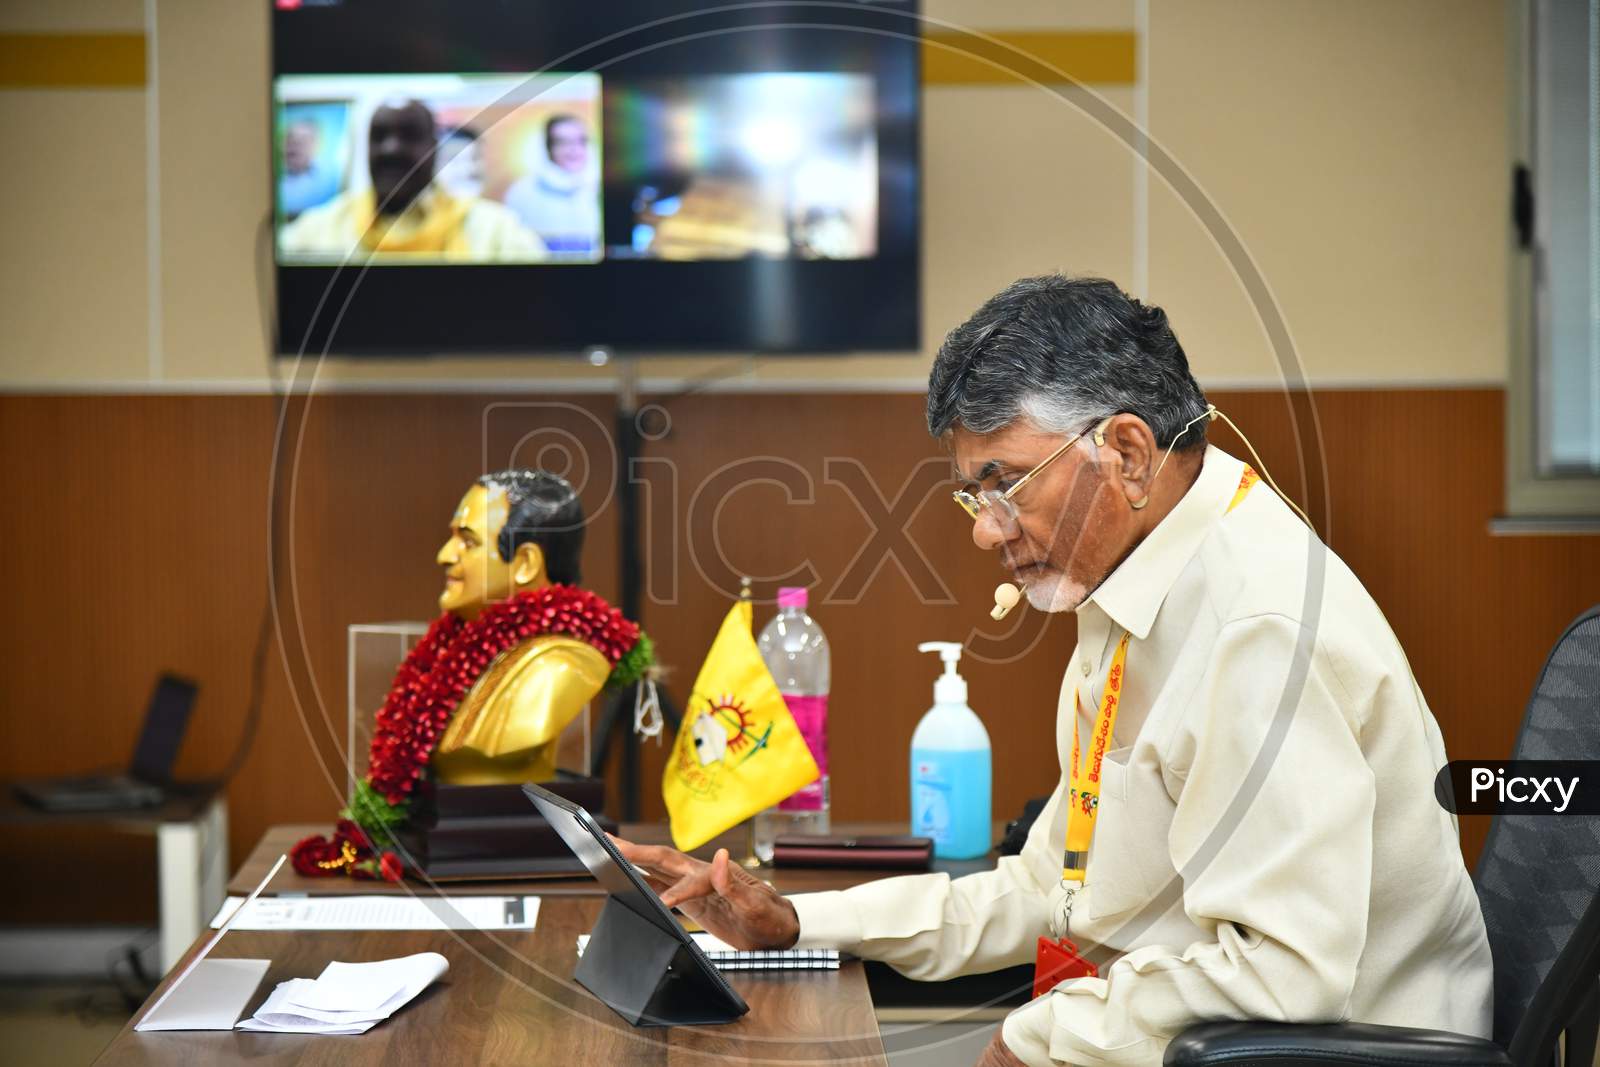 Chandrababu Naidu at Digital Mahanadu 2020